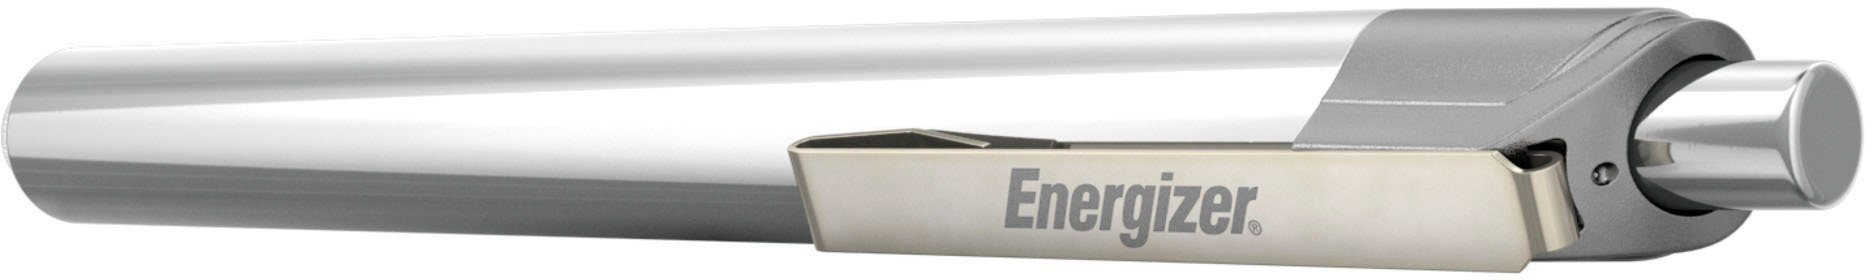 Energizer LED Penlight Taschenlampe